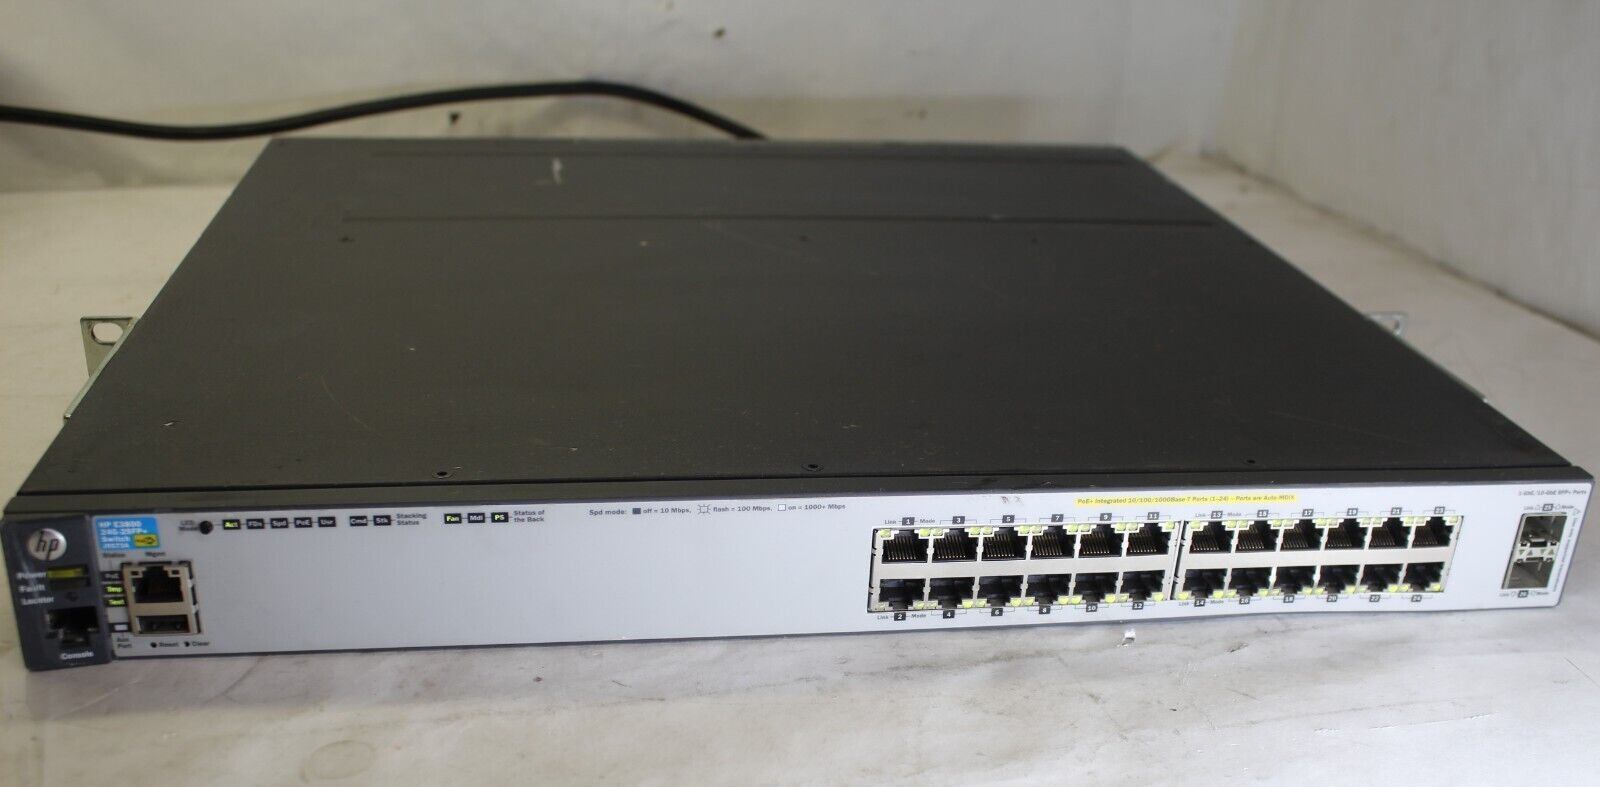 HP J9573A E3800-24G-2SFP+ 24-Port PoE Managed Gigabit Switch RSVLC-1003B & 2PSU